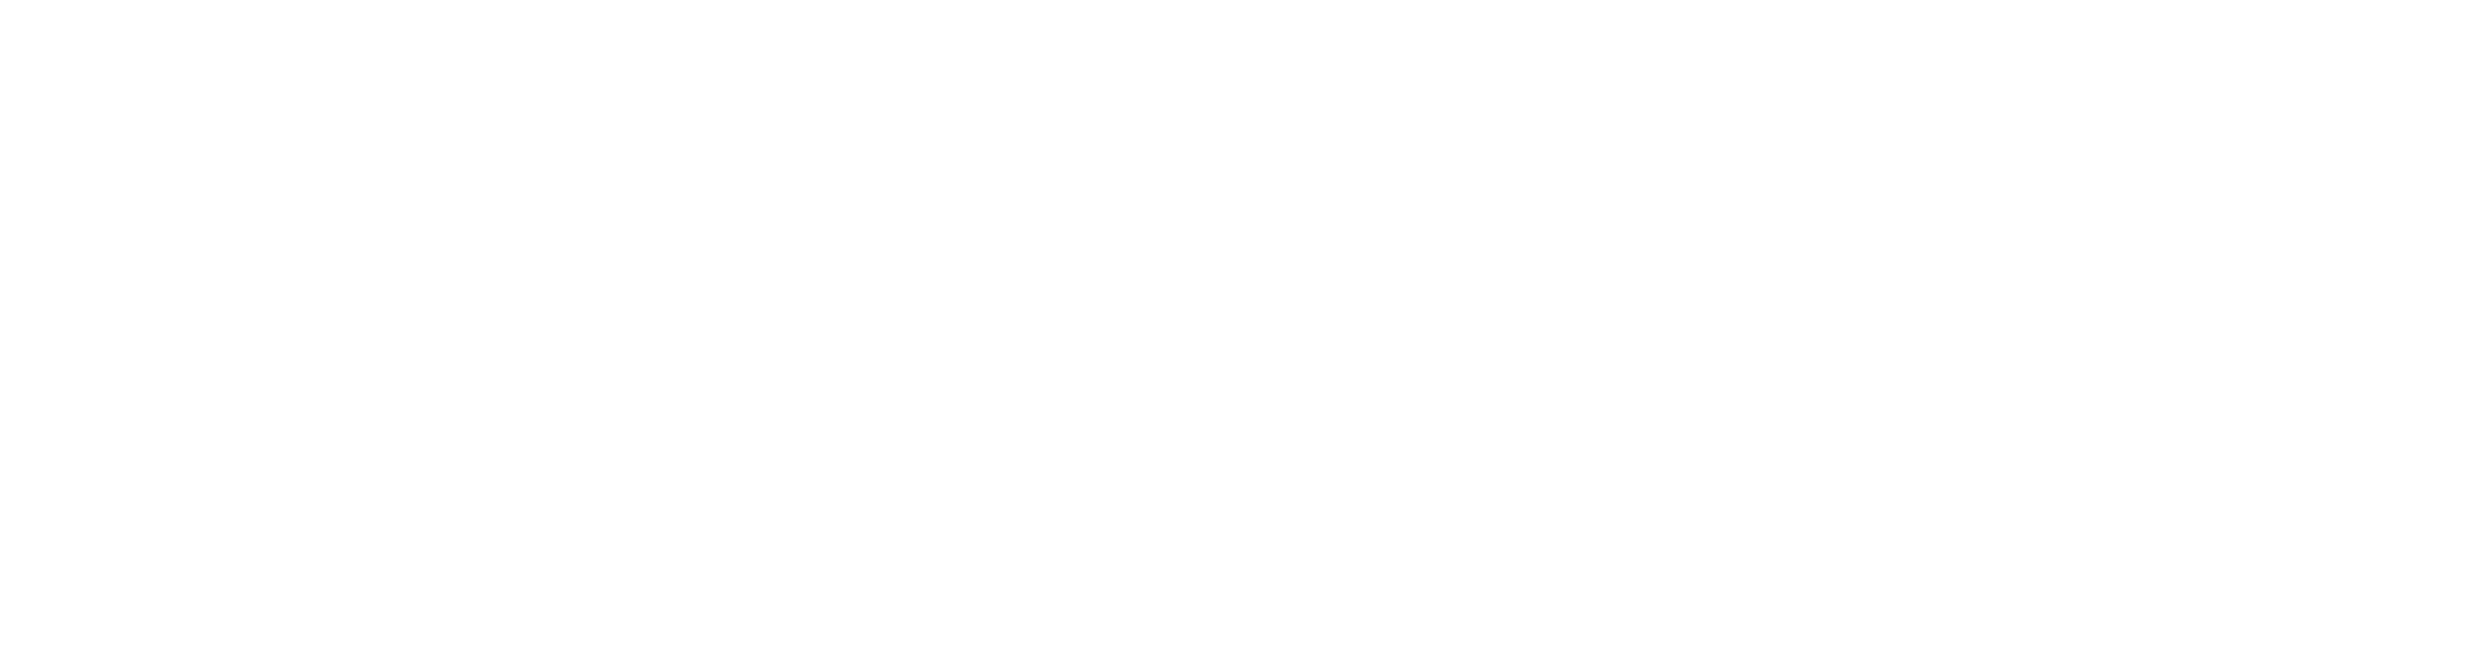 Schizophrenia-and-Psychosis-Action-Alliance_Horizontal_trademark_1_white